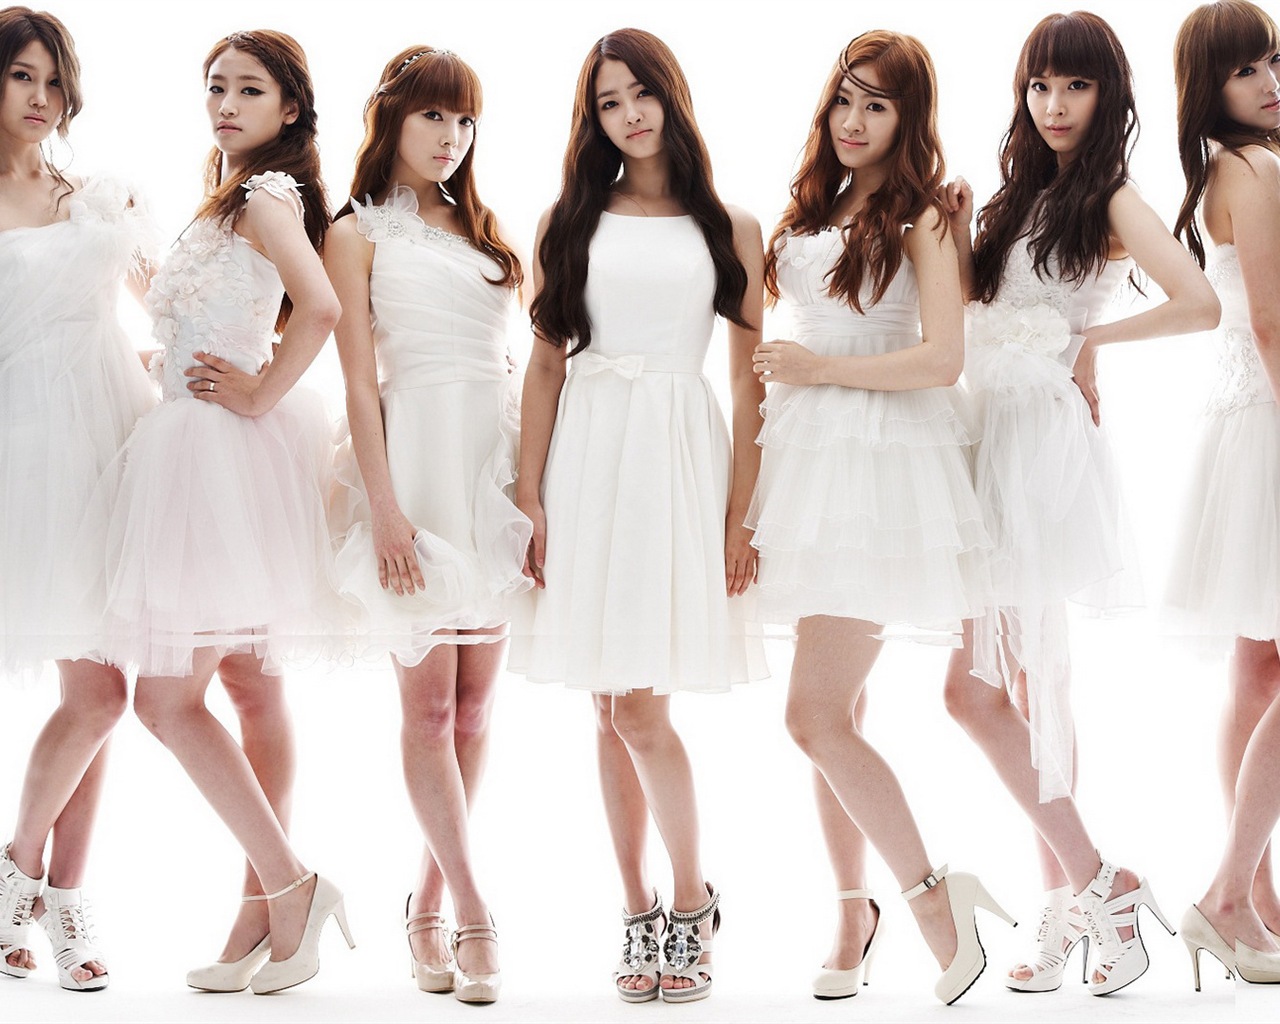 CHI CHI koreanische Musik Girlgroup HD Wallpapers #5 - 1280x1024